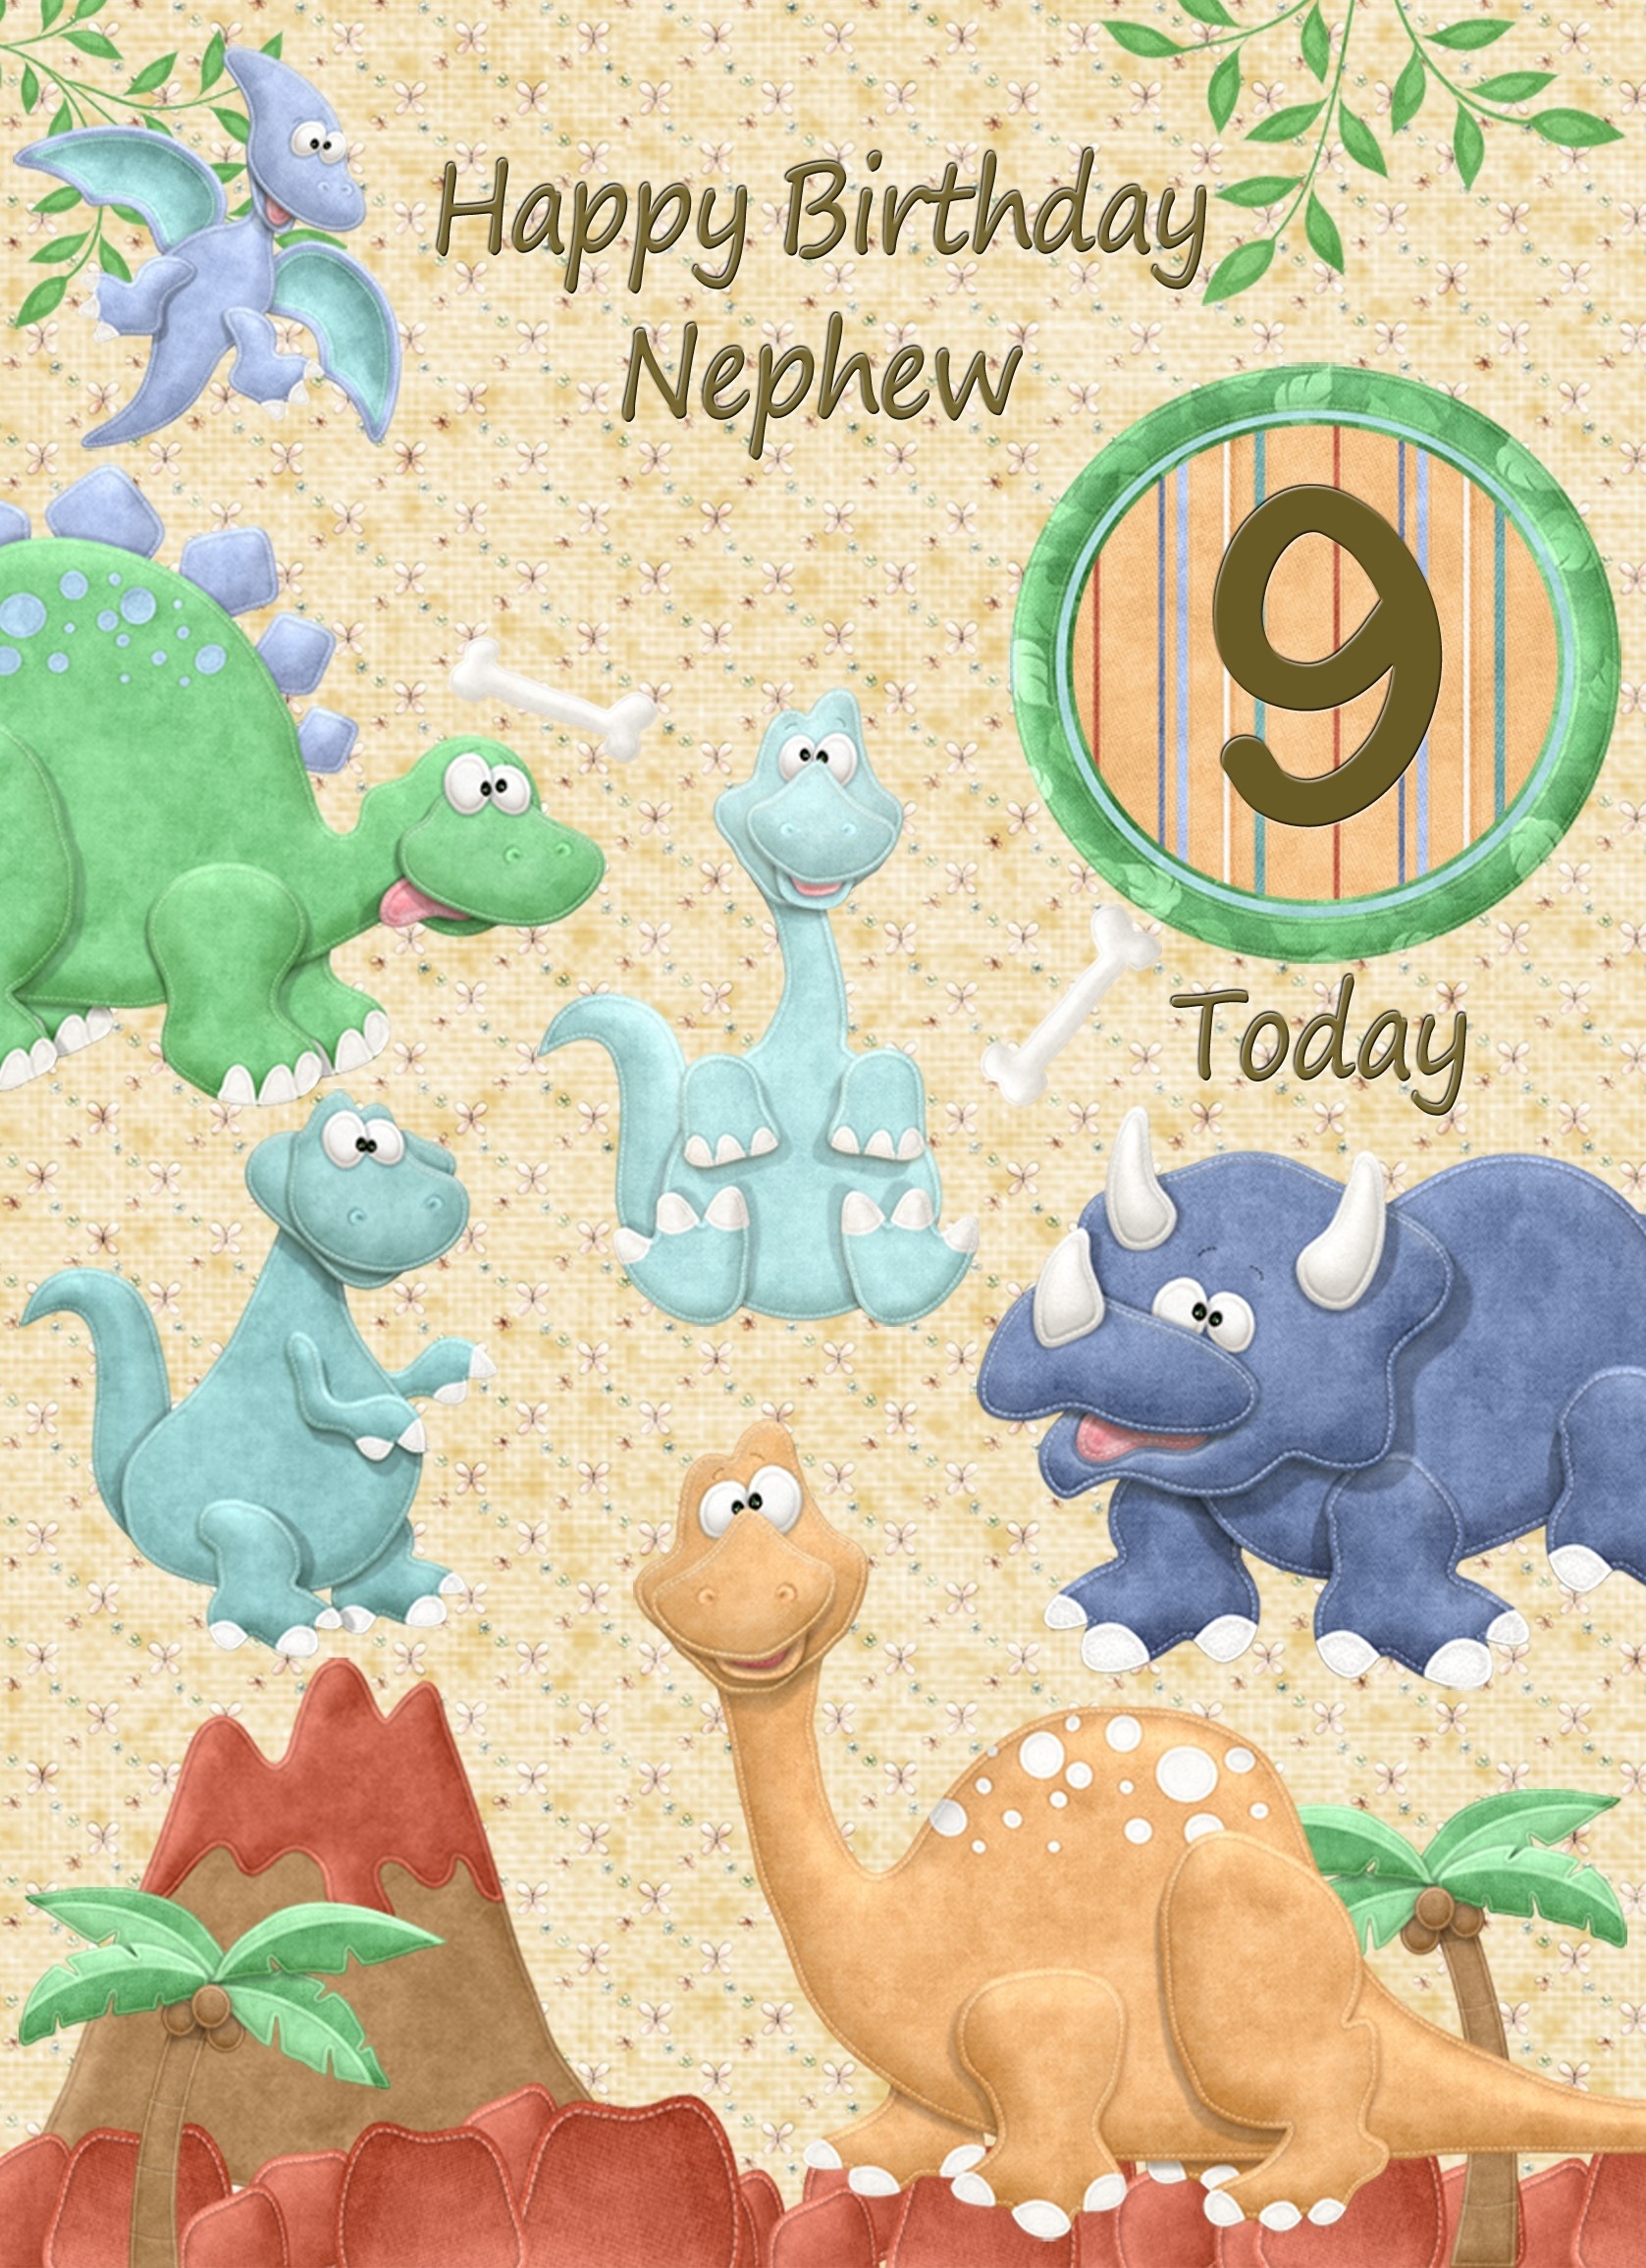 Kids 9th Birthday Dinosaur Cartoon Card for Nephew